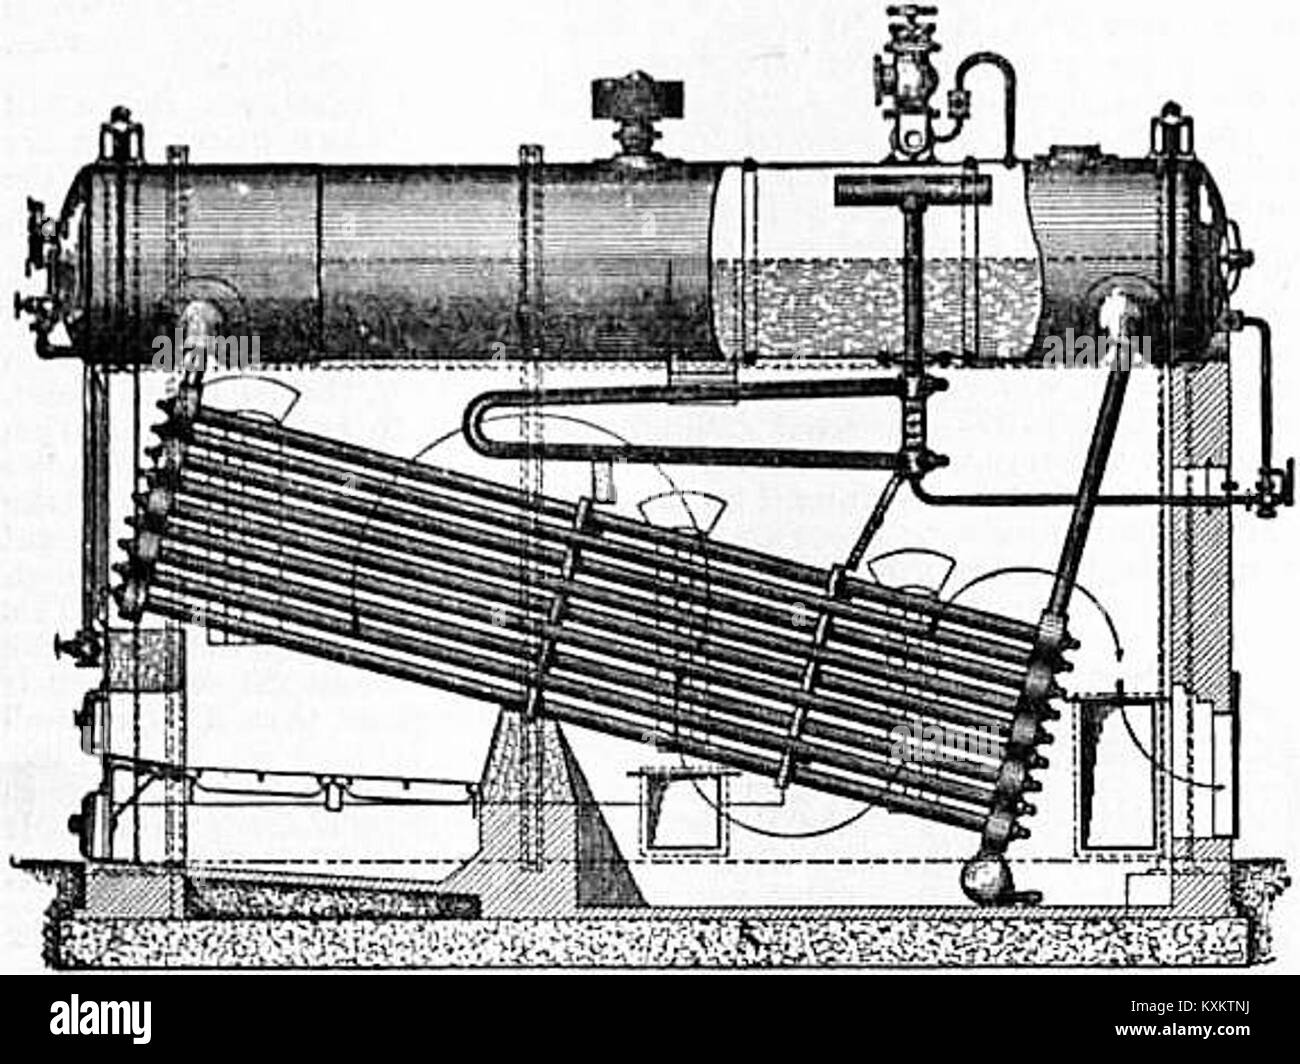 Babcock & Wilcox acqua caldaia tubo - Caldaia - Britannica - Fig. 11 Foto  stock - Alamy